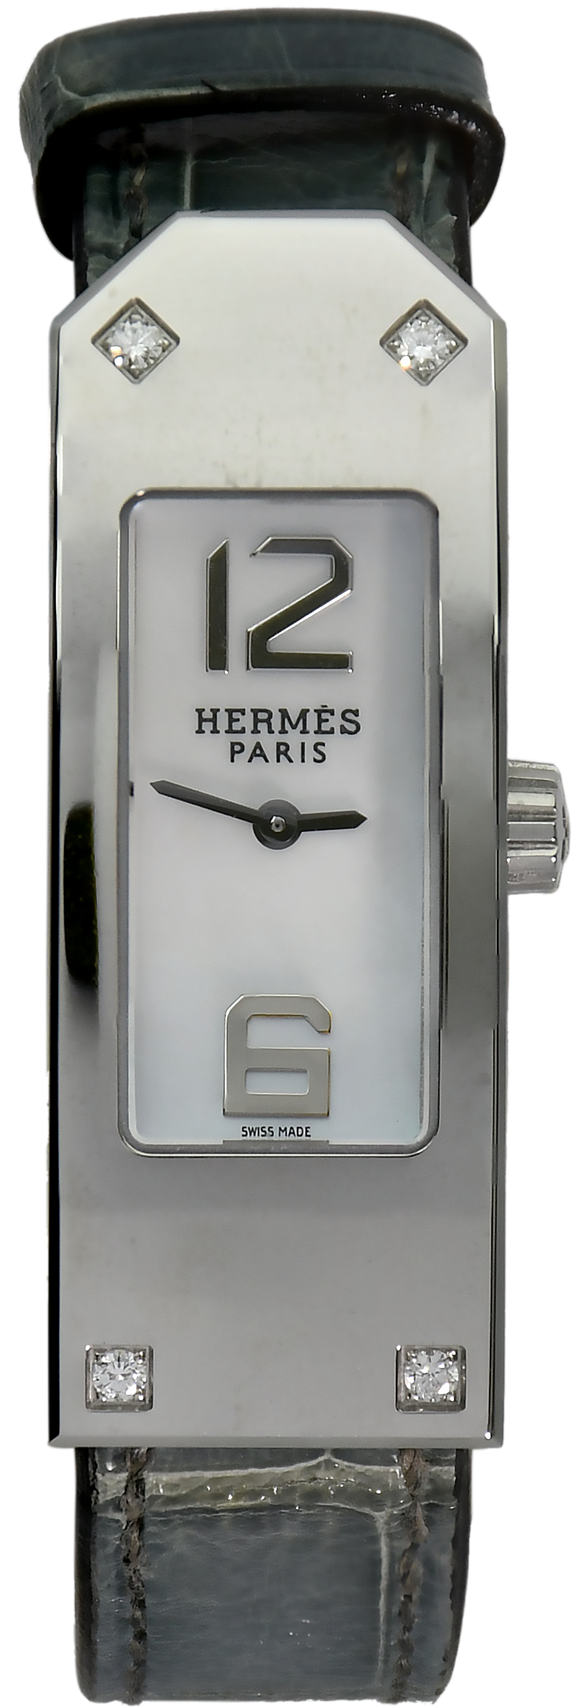 Hermès KT1.230.212 ZJE - Parini's